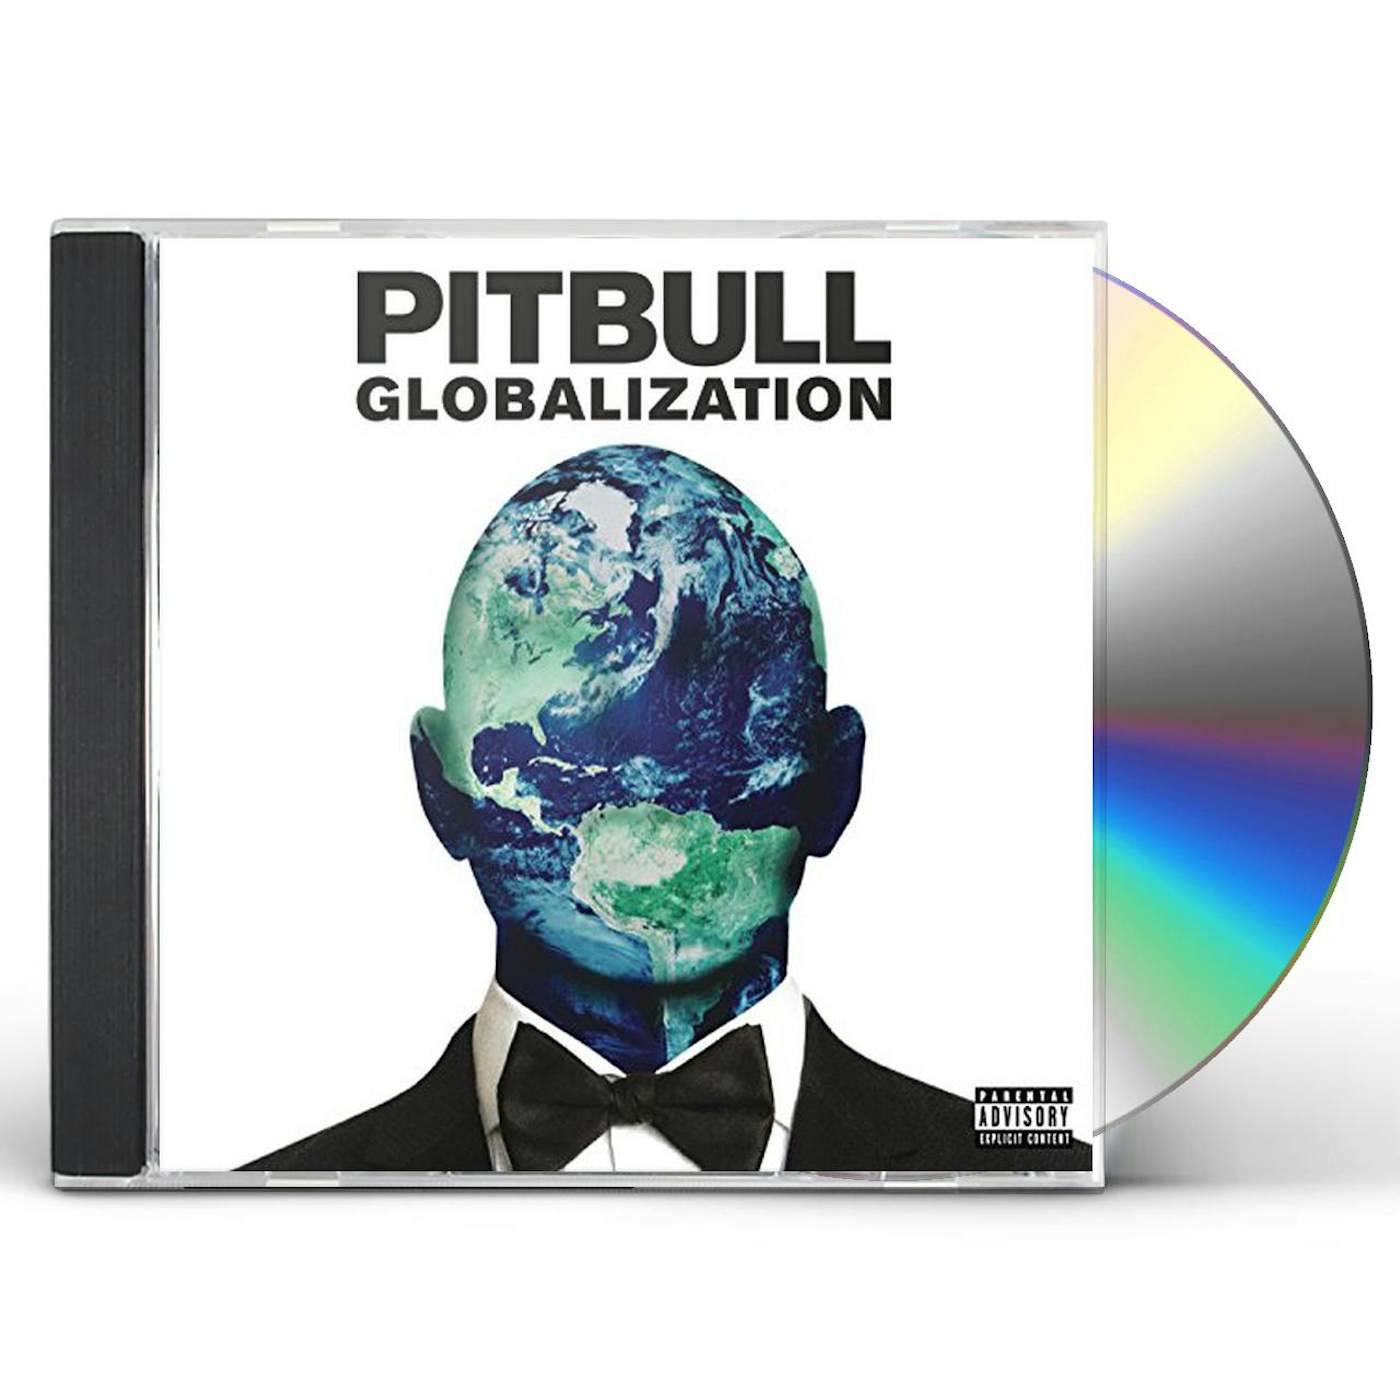 Pitbull GLOBALIZATION CD